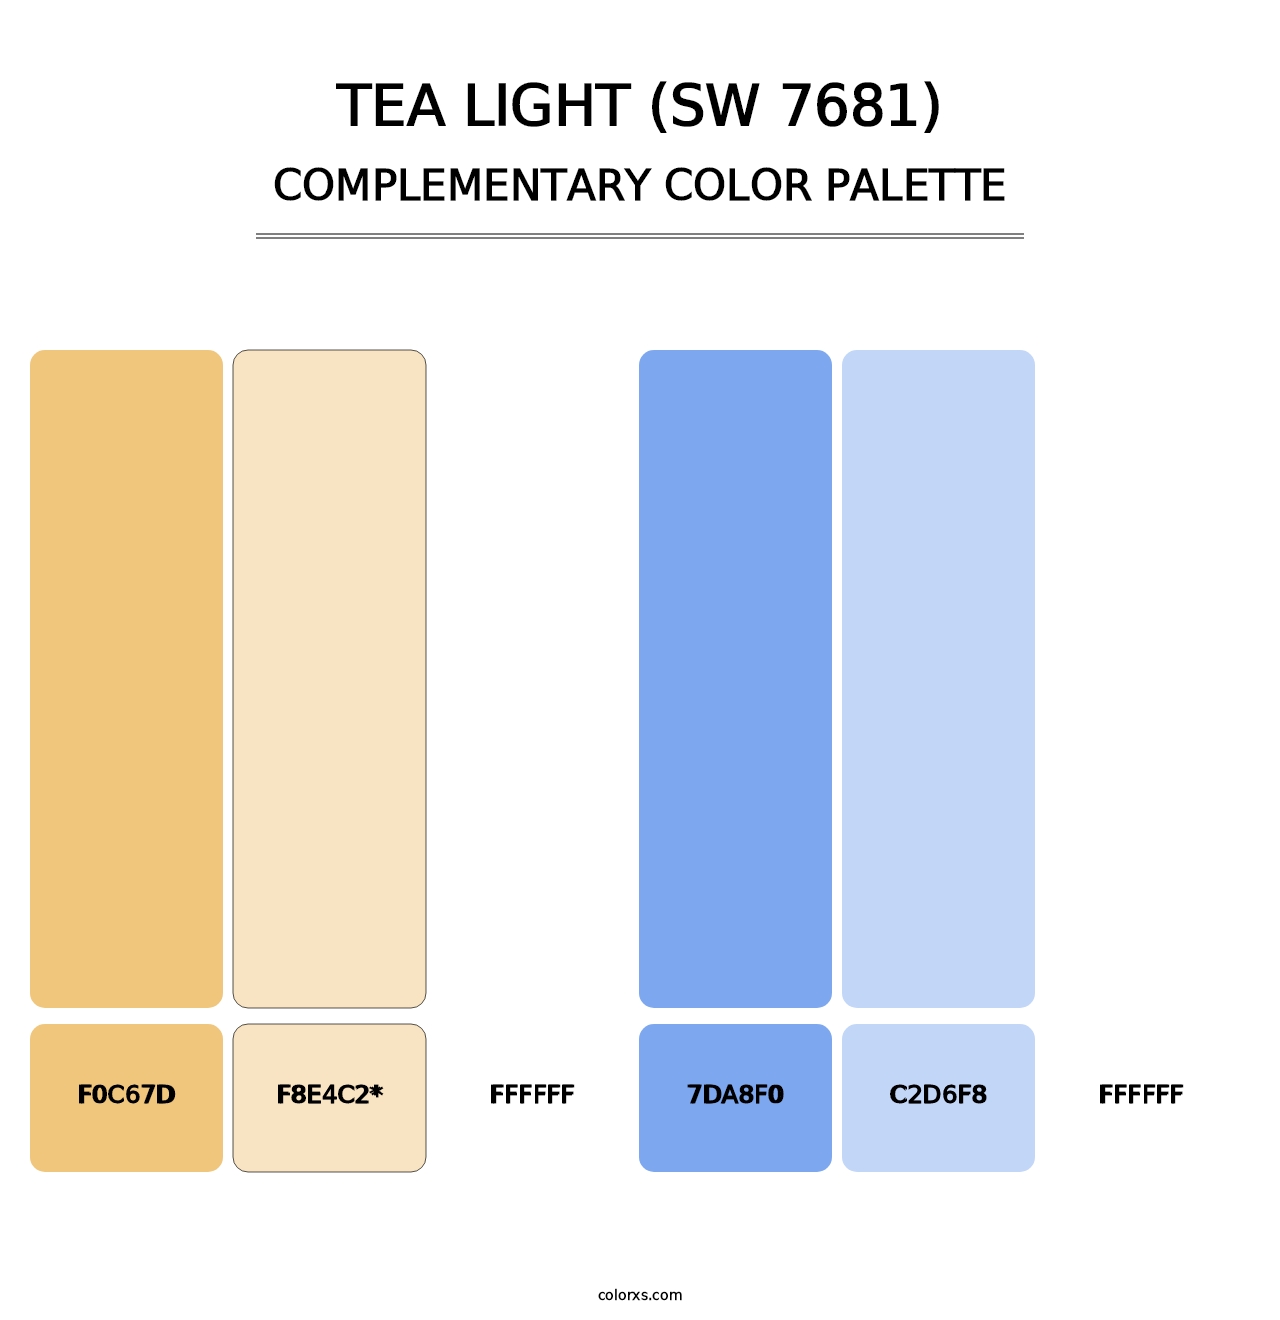 Tea Light (SW 7681) - Complementary Color Palette